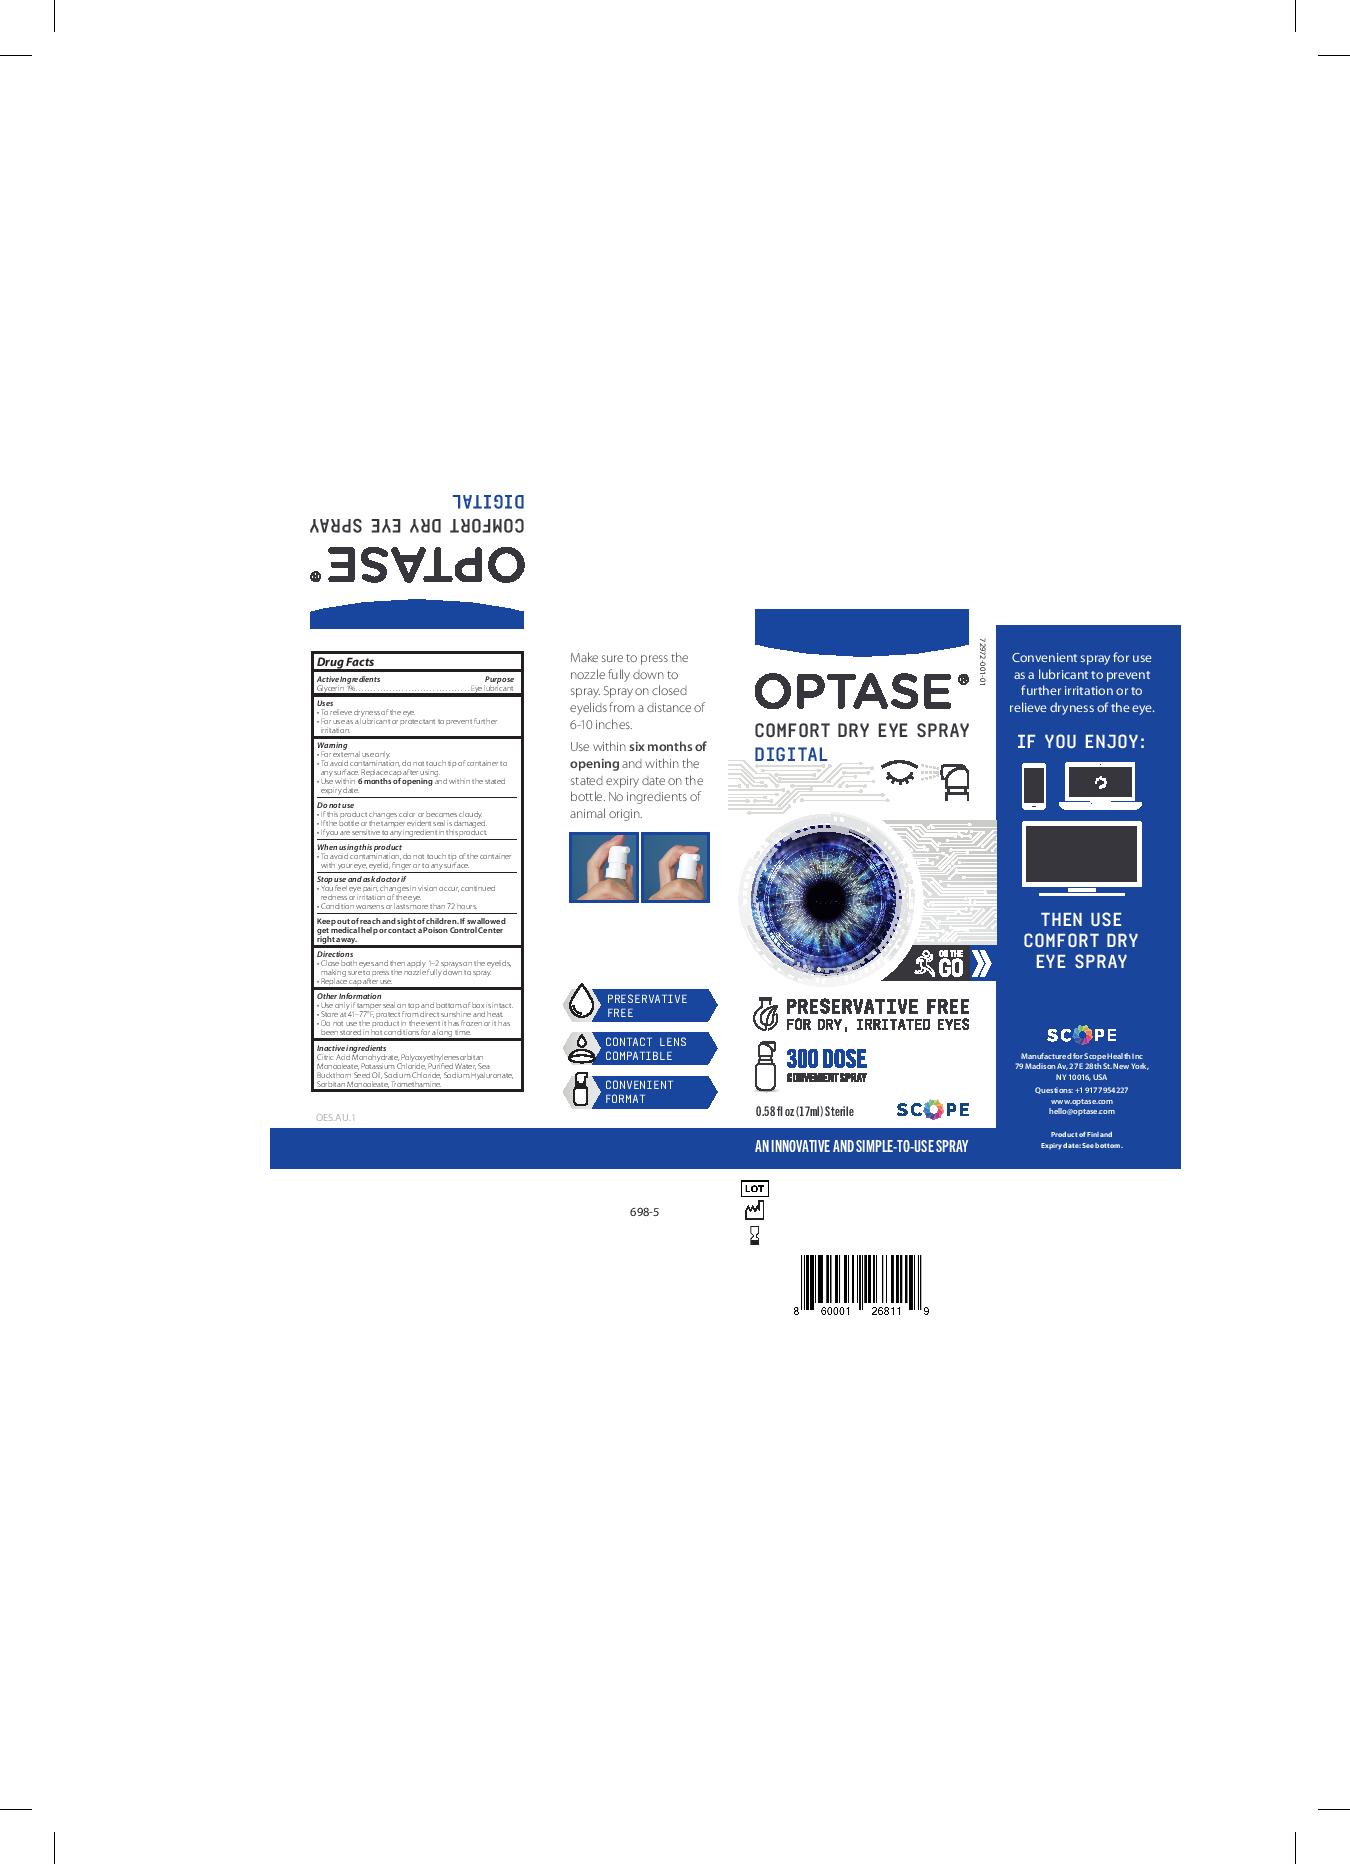 Optase Comfort Eye Spray